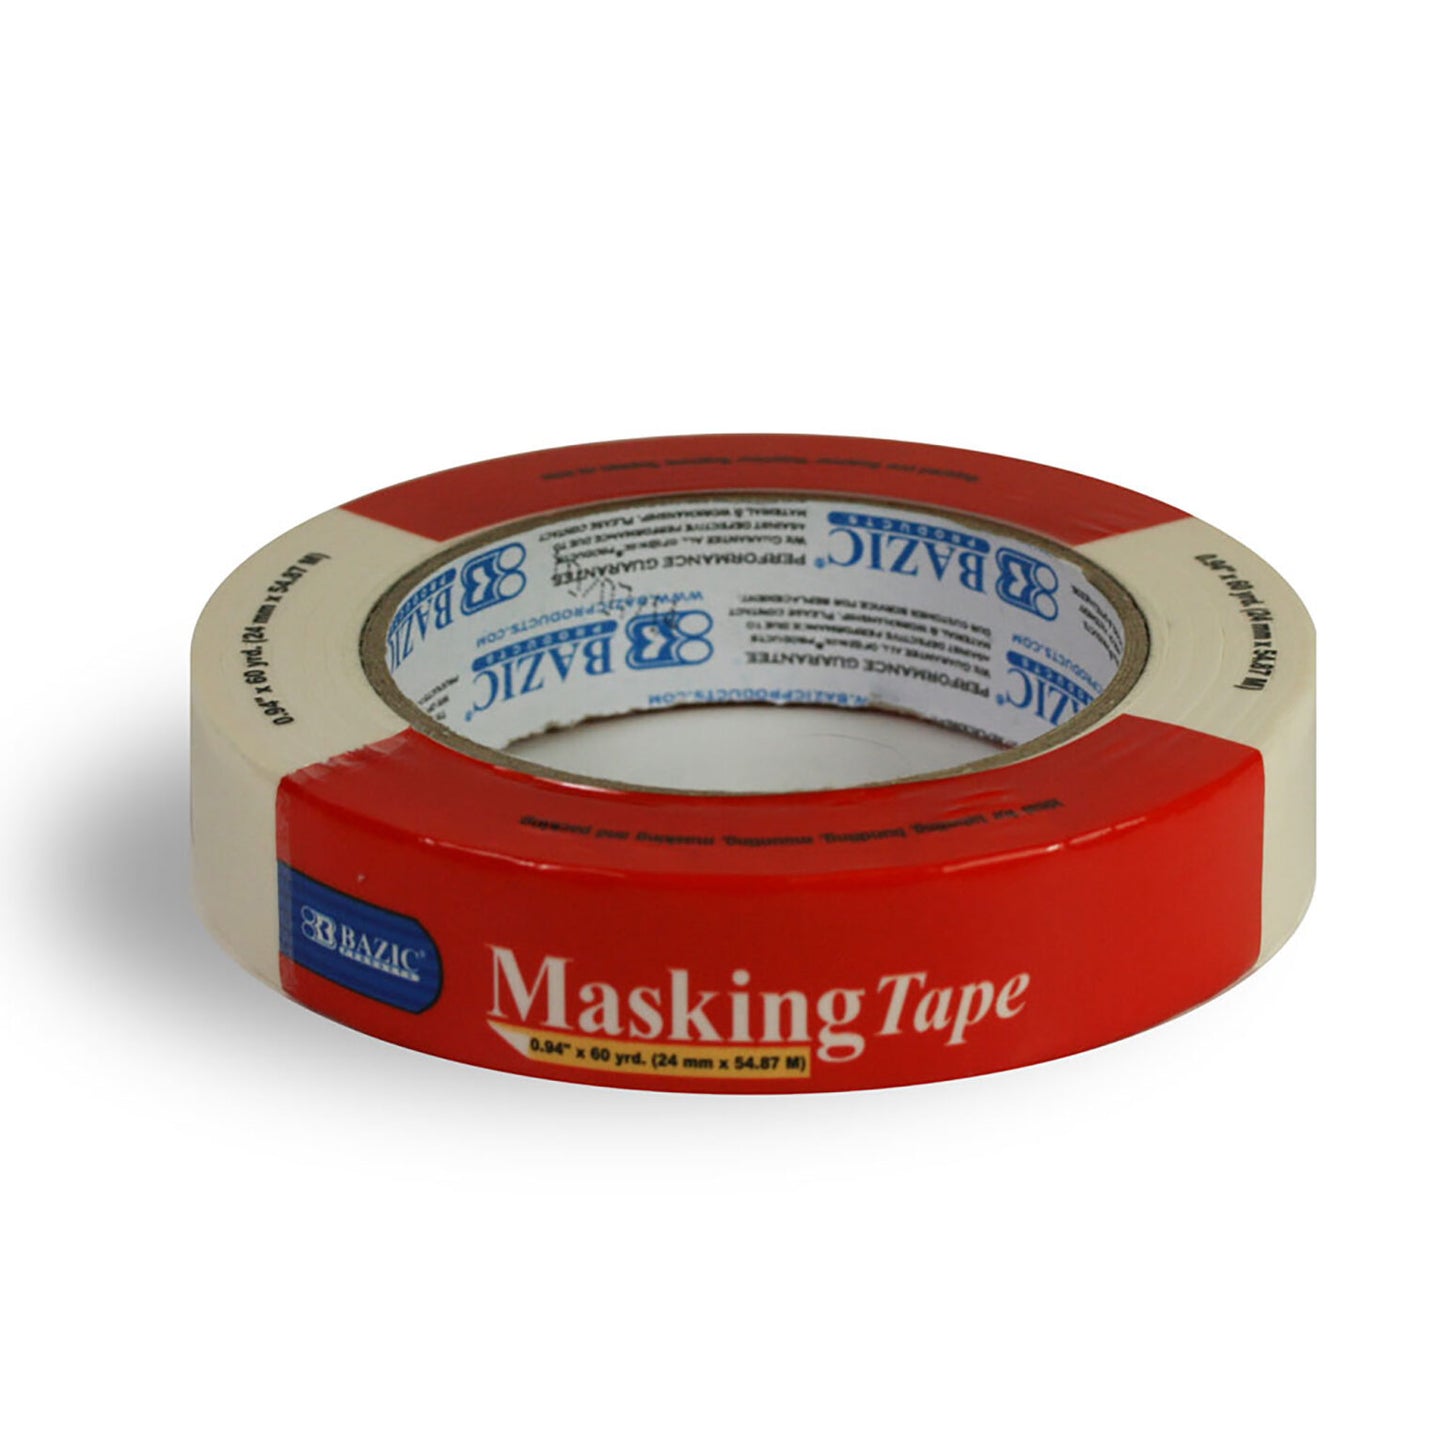 Masking Tape 0.94"x 60yards